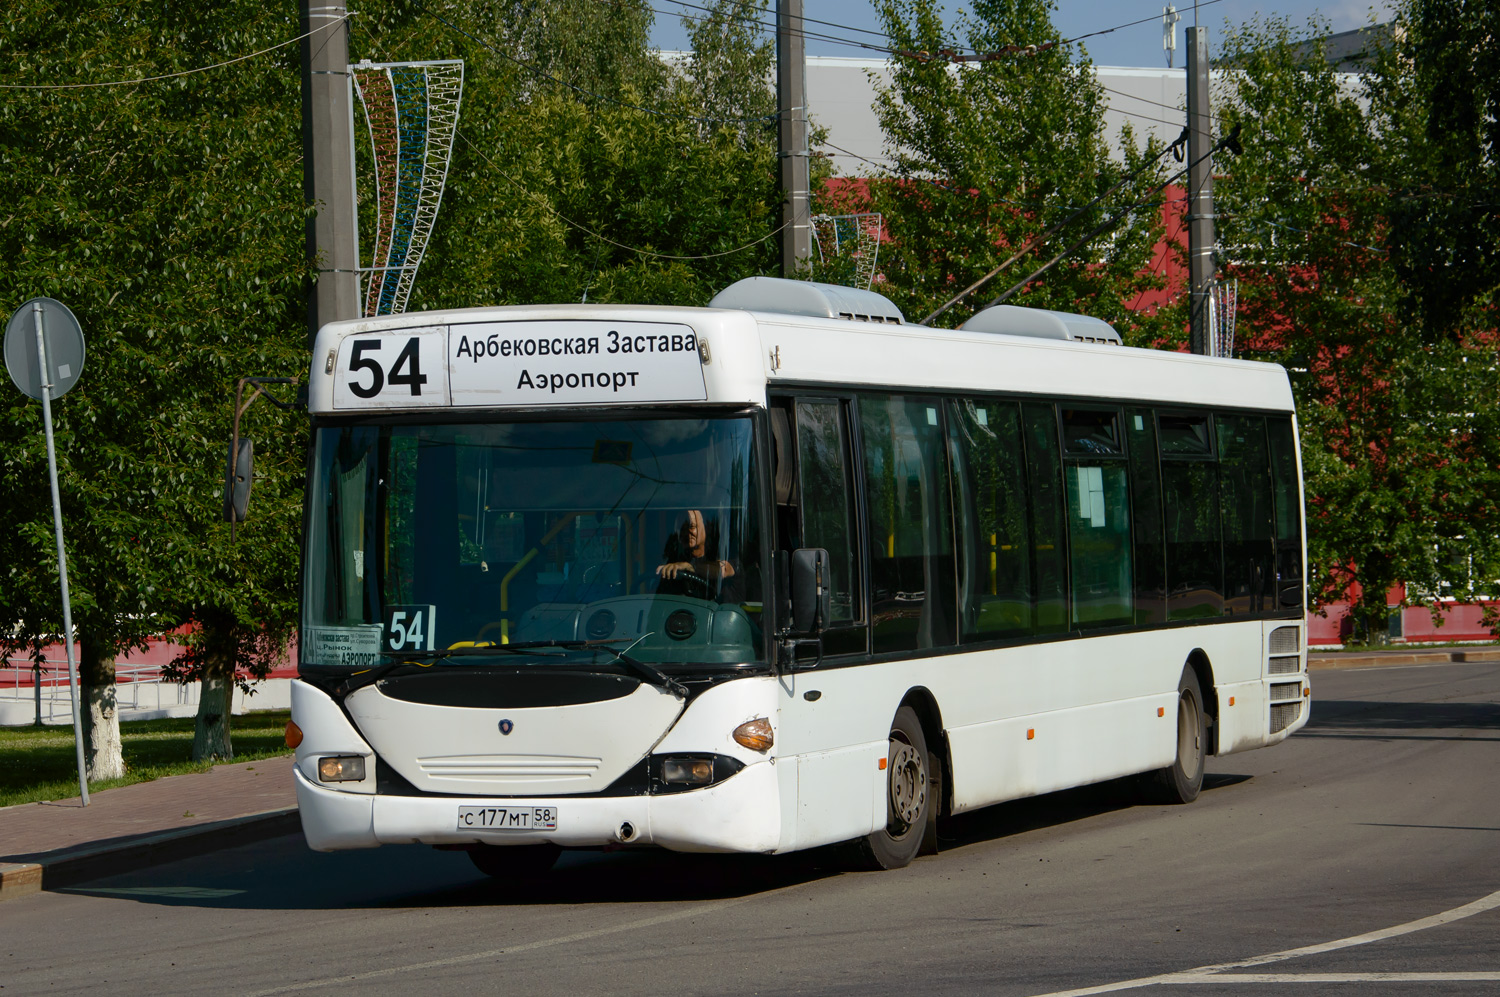 Penza region, Scania OmniLink I (Scania-St.Petersburg) # С 177 МТ 58